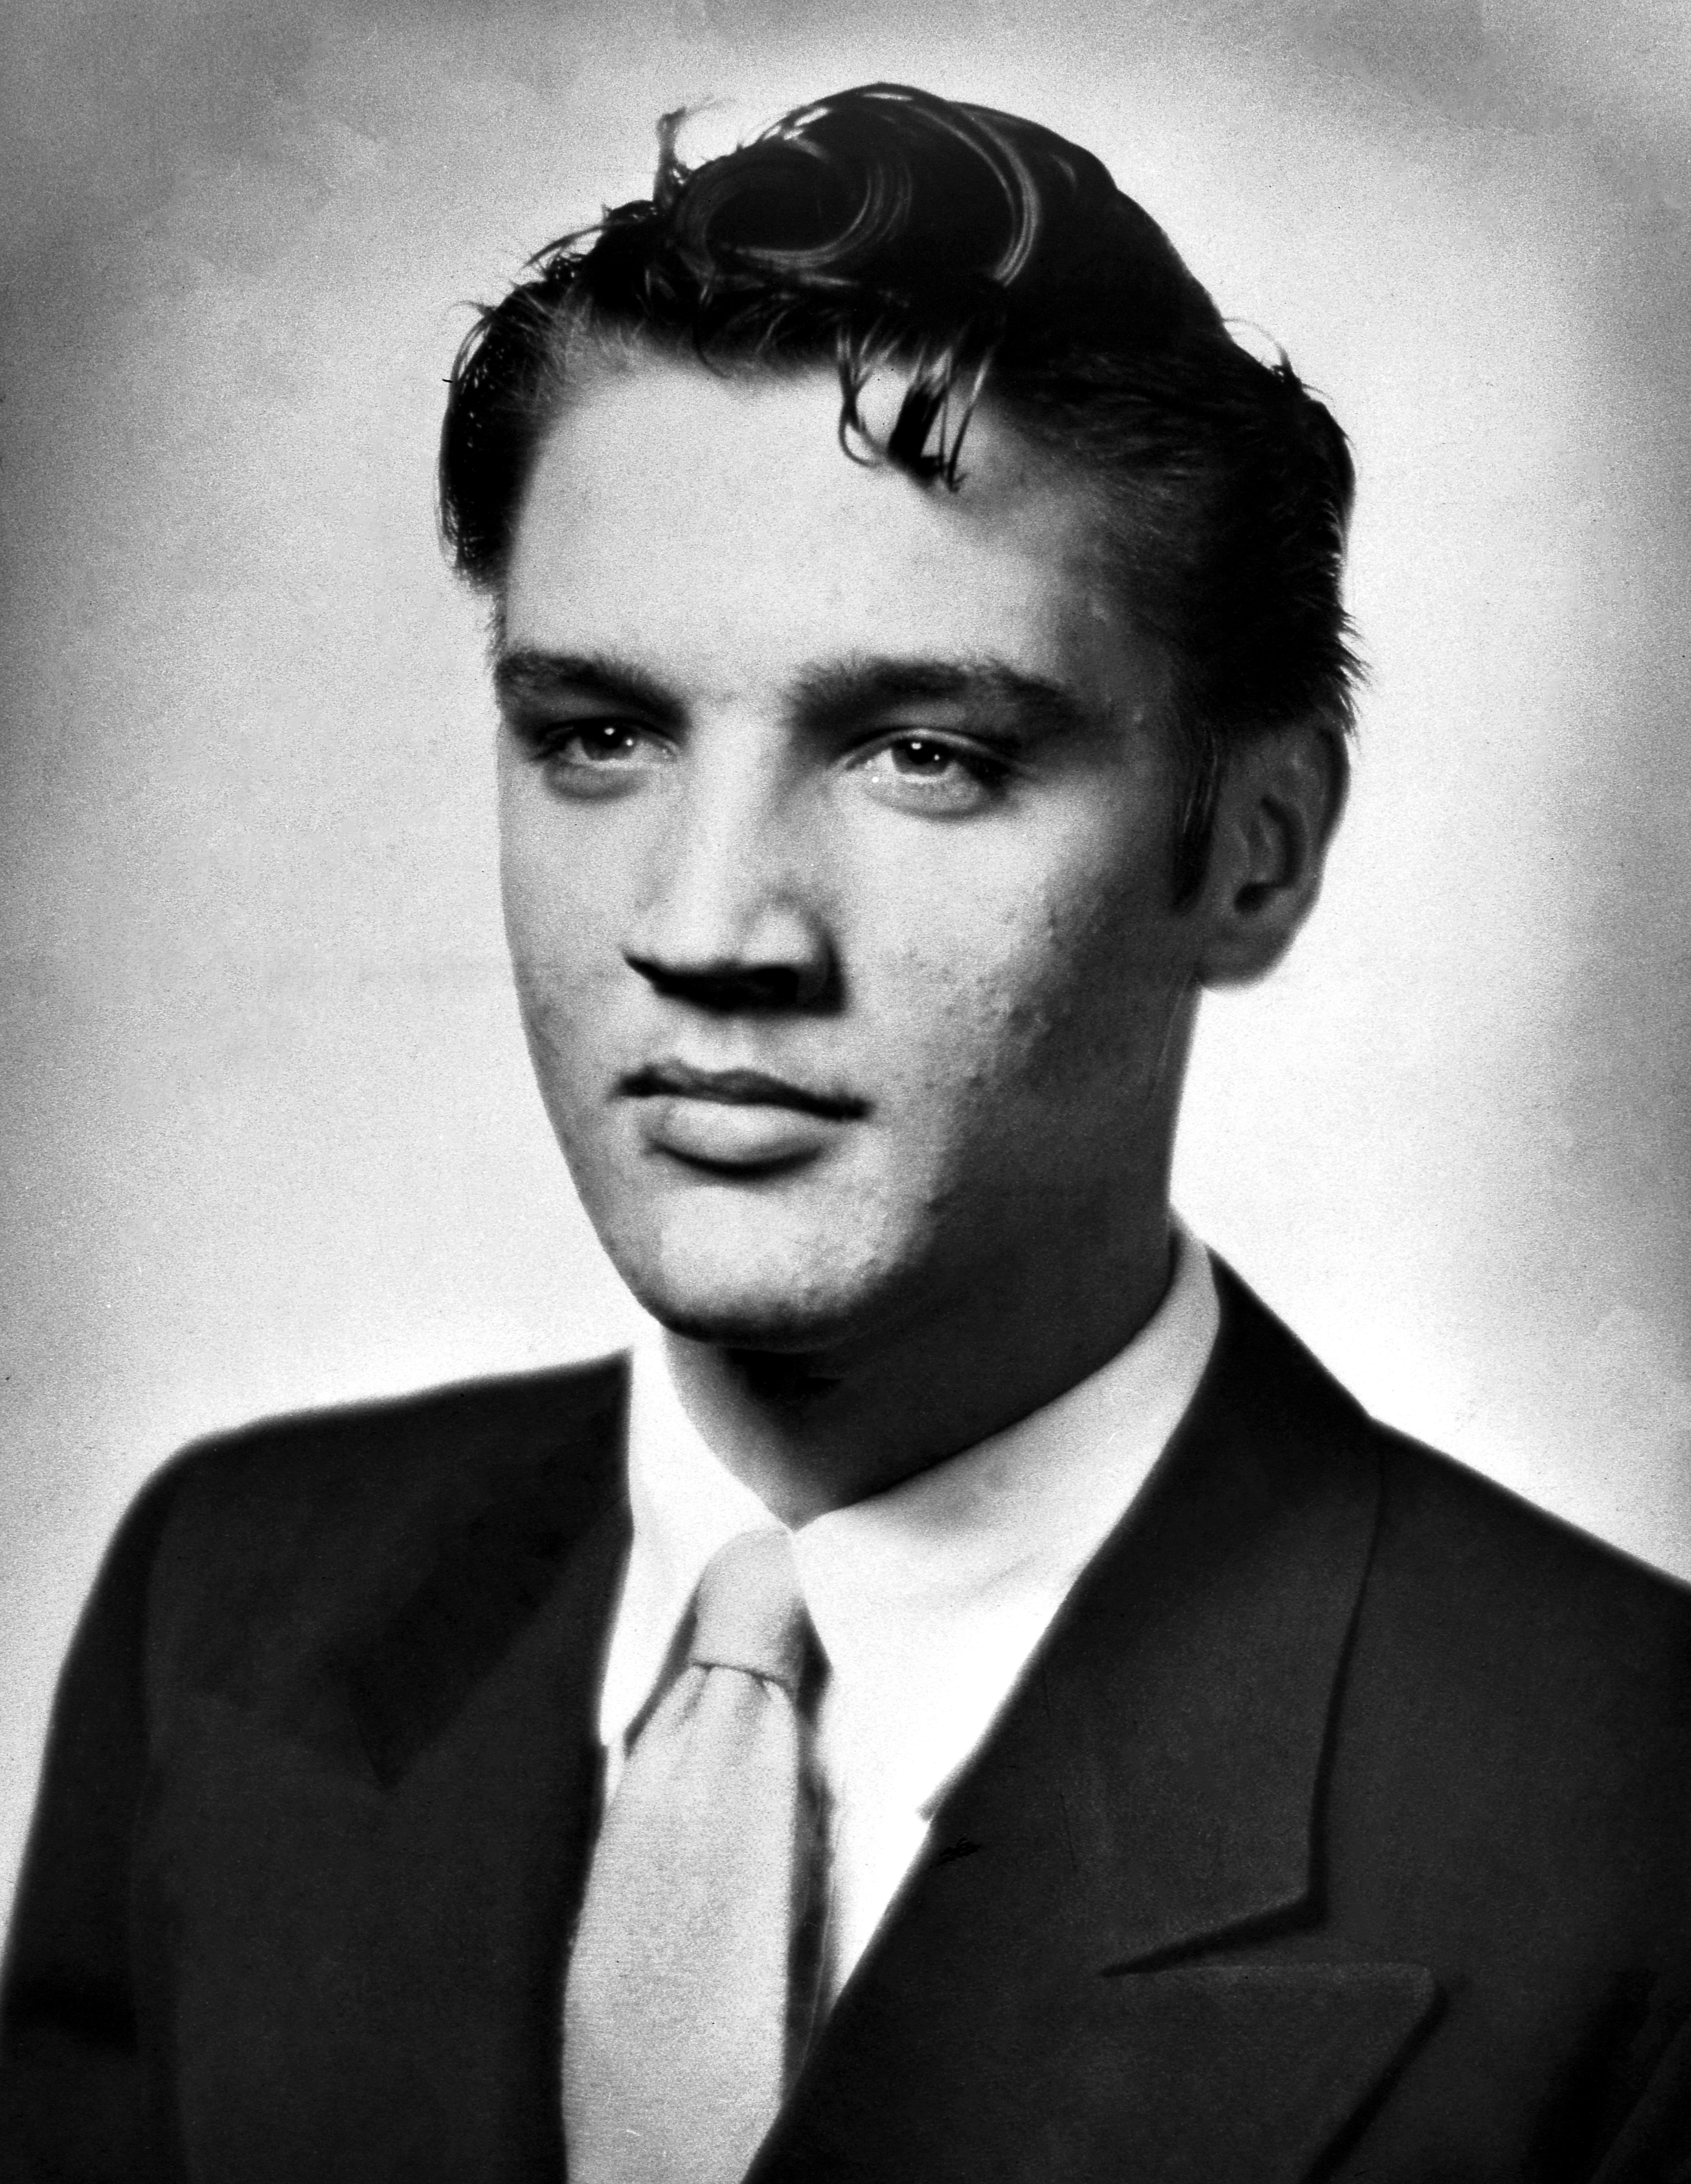 Unknown Portrait Photograph - Elvis Presley Handsome Teenager in the Studio Globe Photos Fine Art Print